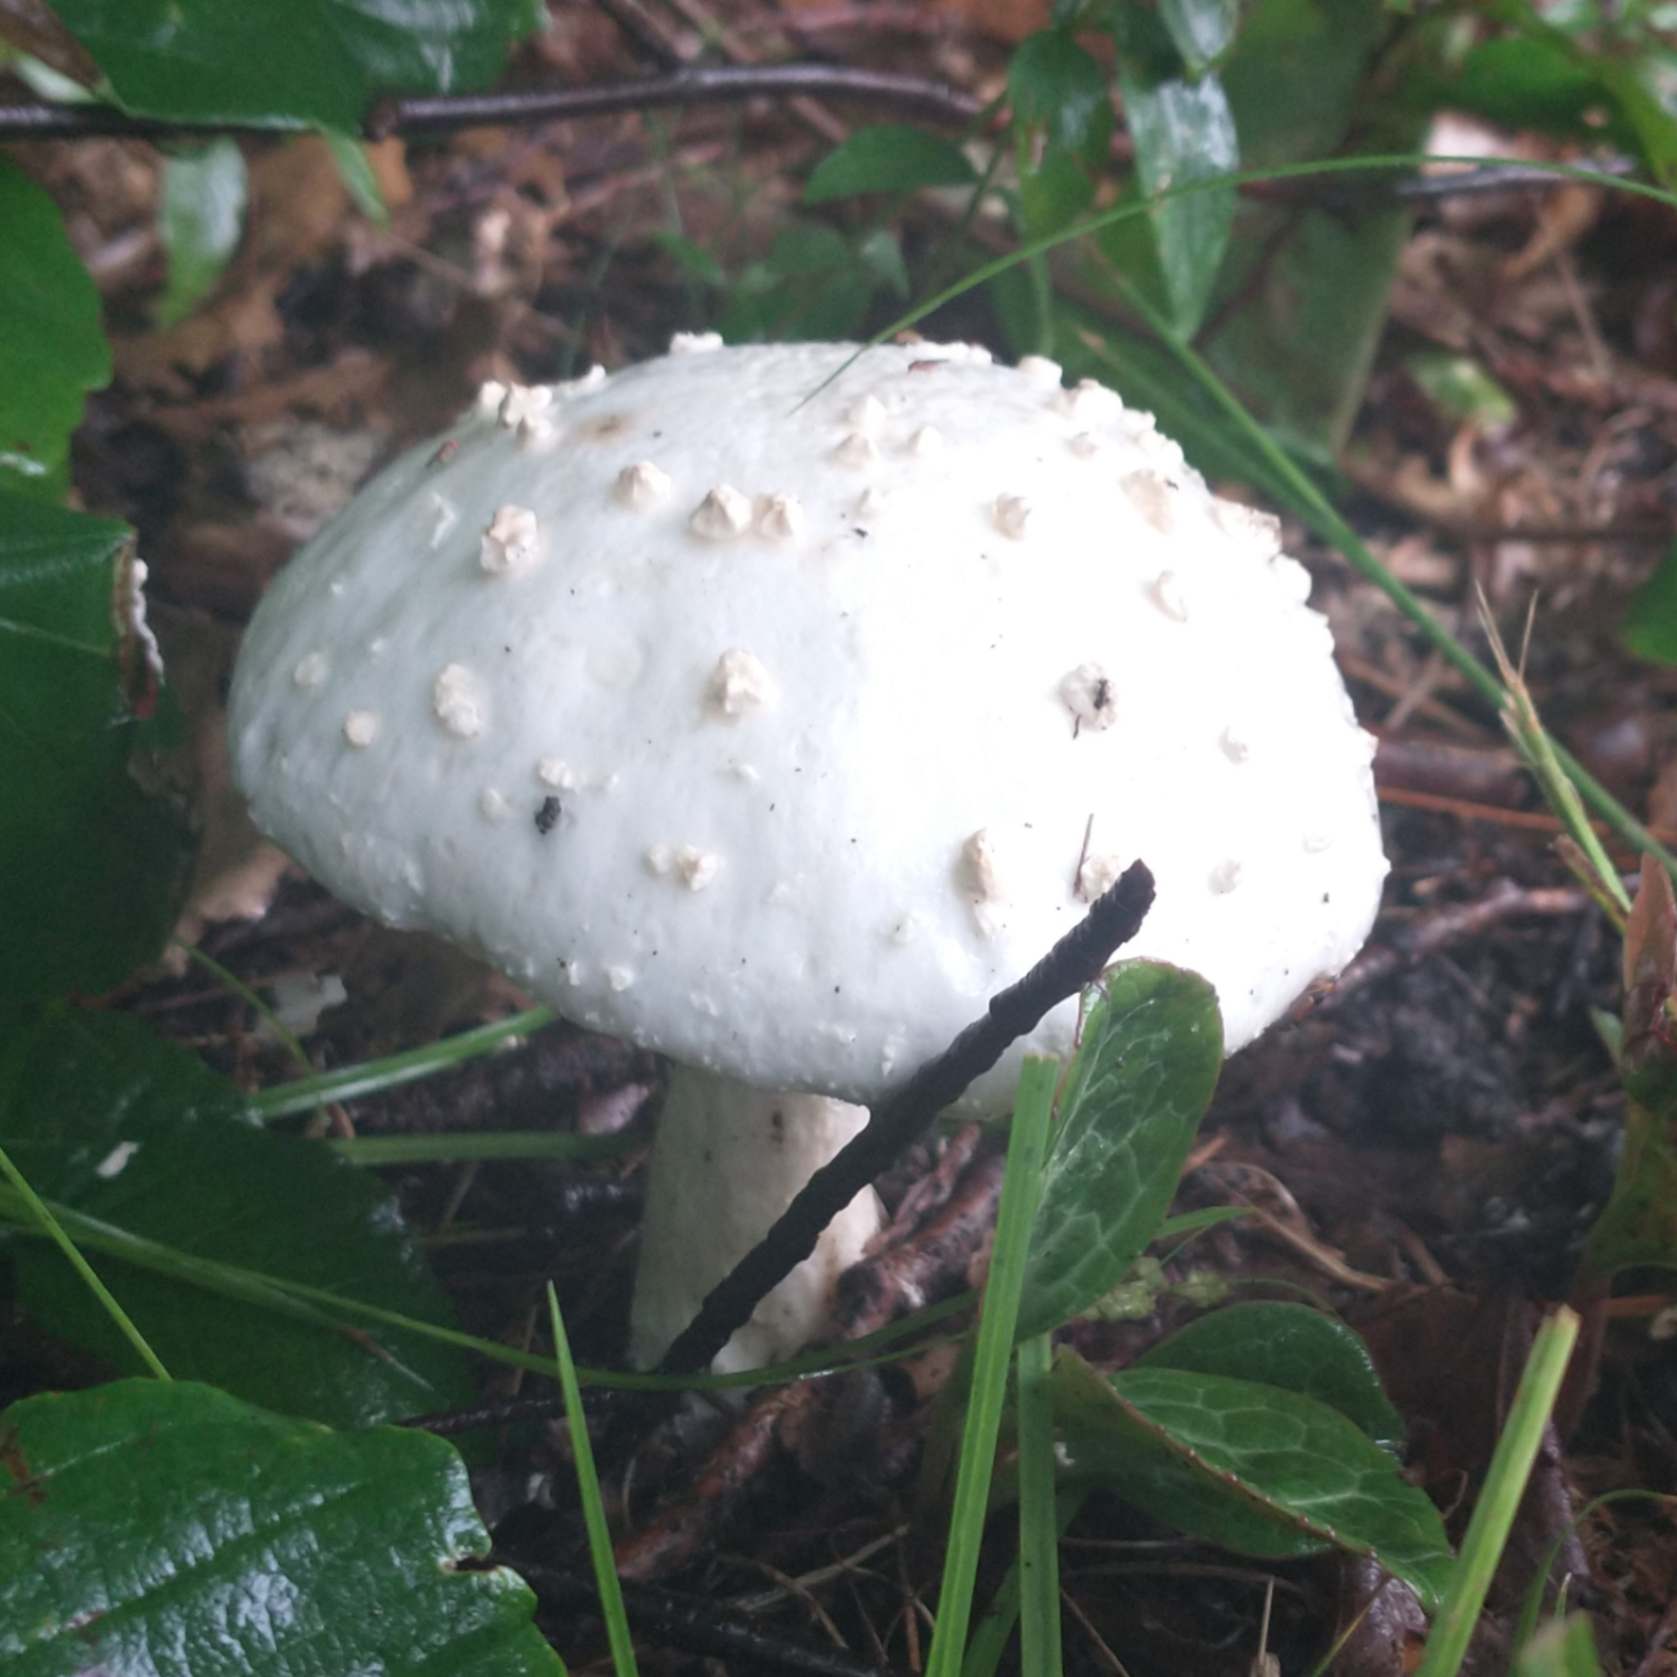 White possible Amanita mushroom.